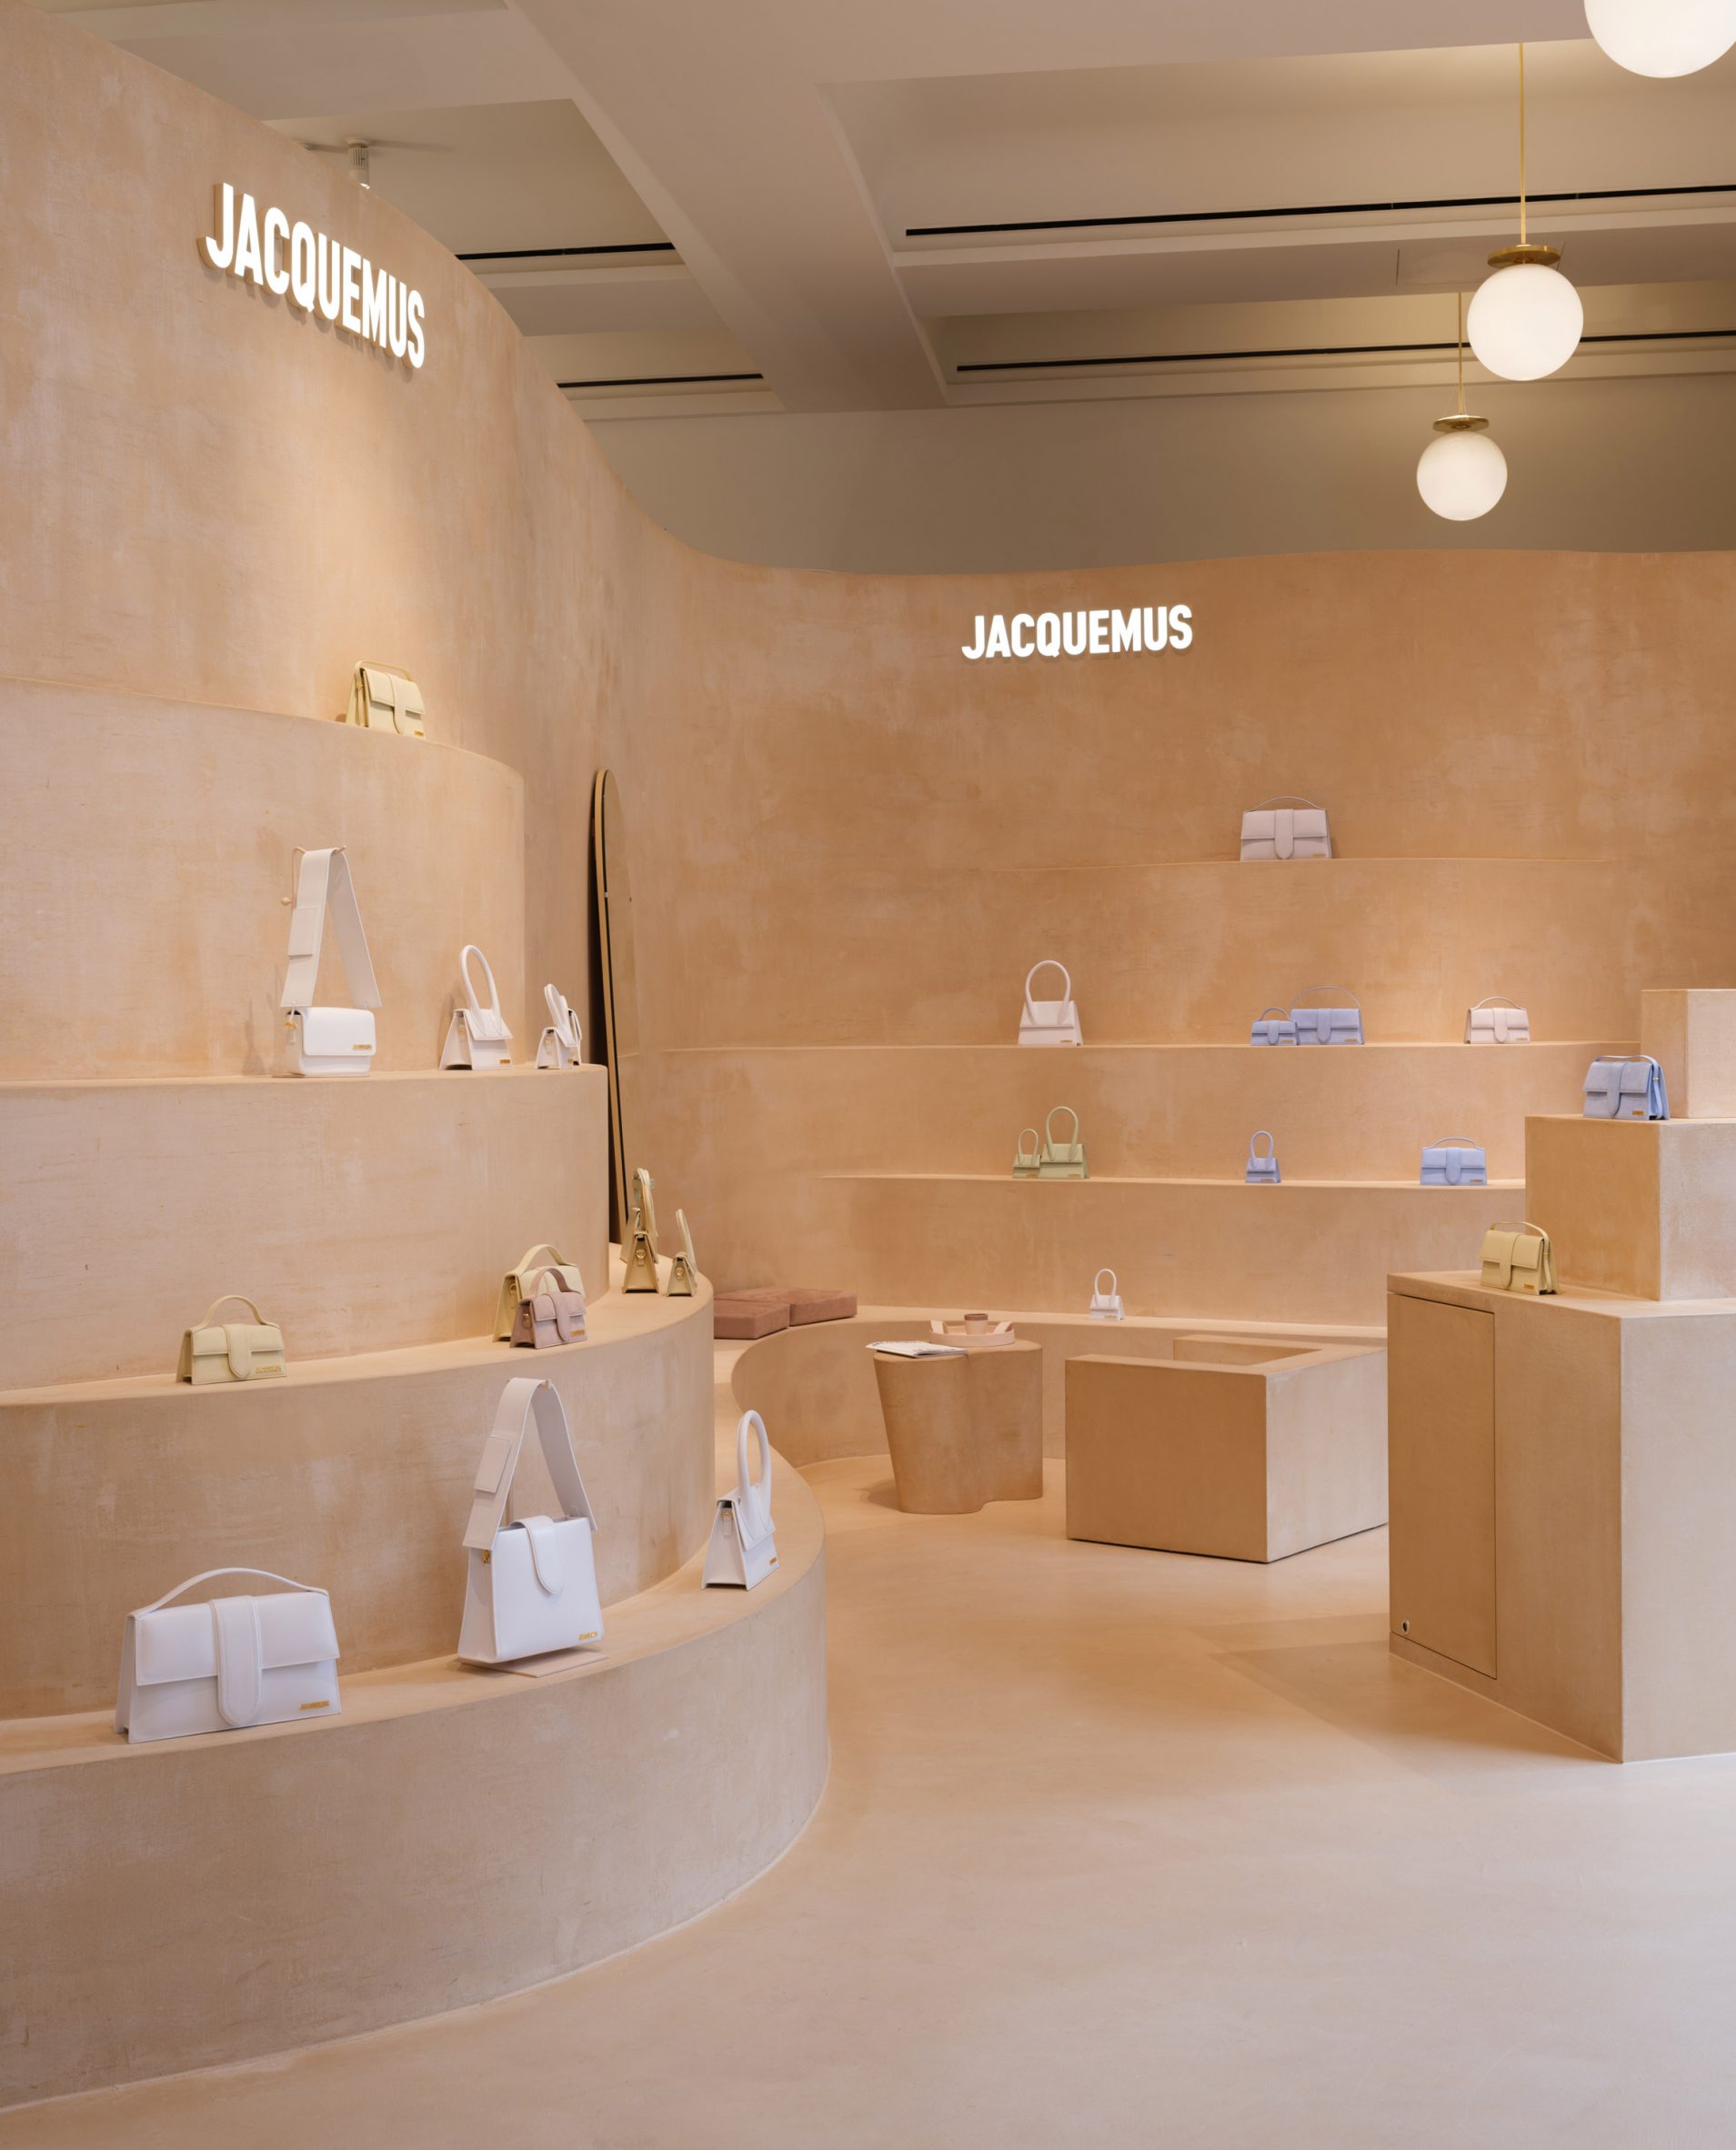 Interior image of the Jacquemus Selfridges store